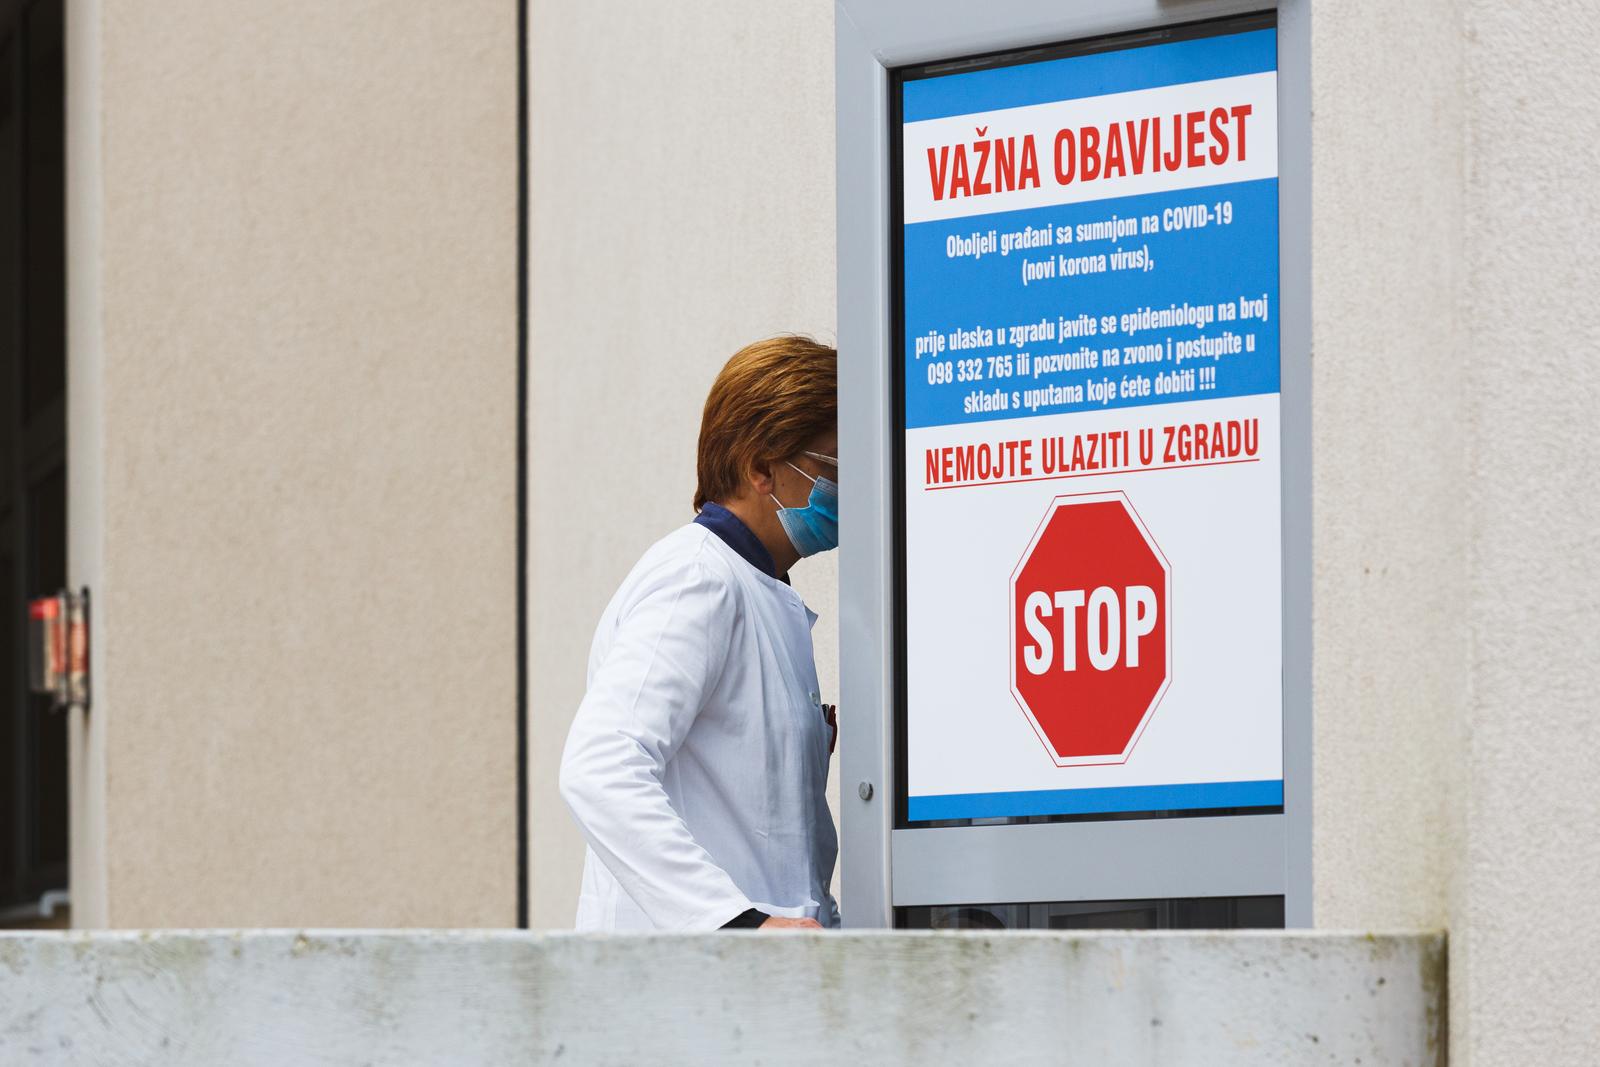 14.10.2020., Zadar - Testiranje na COVID-19 u zadarskoj bolnici.  

Photo: Marko Dimic/PIXSELL